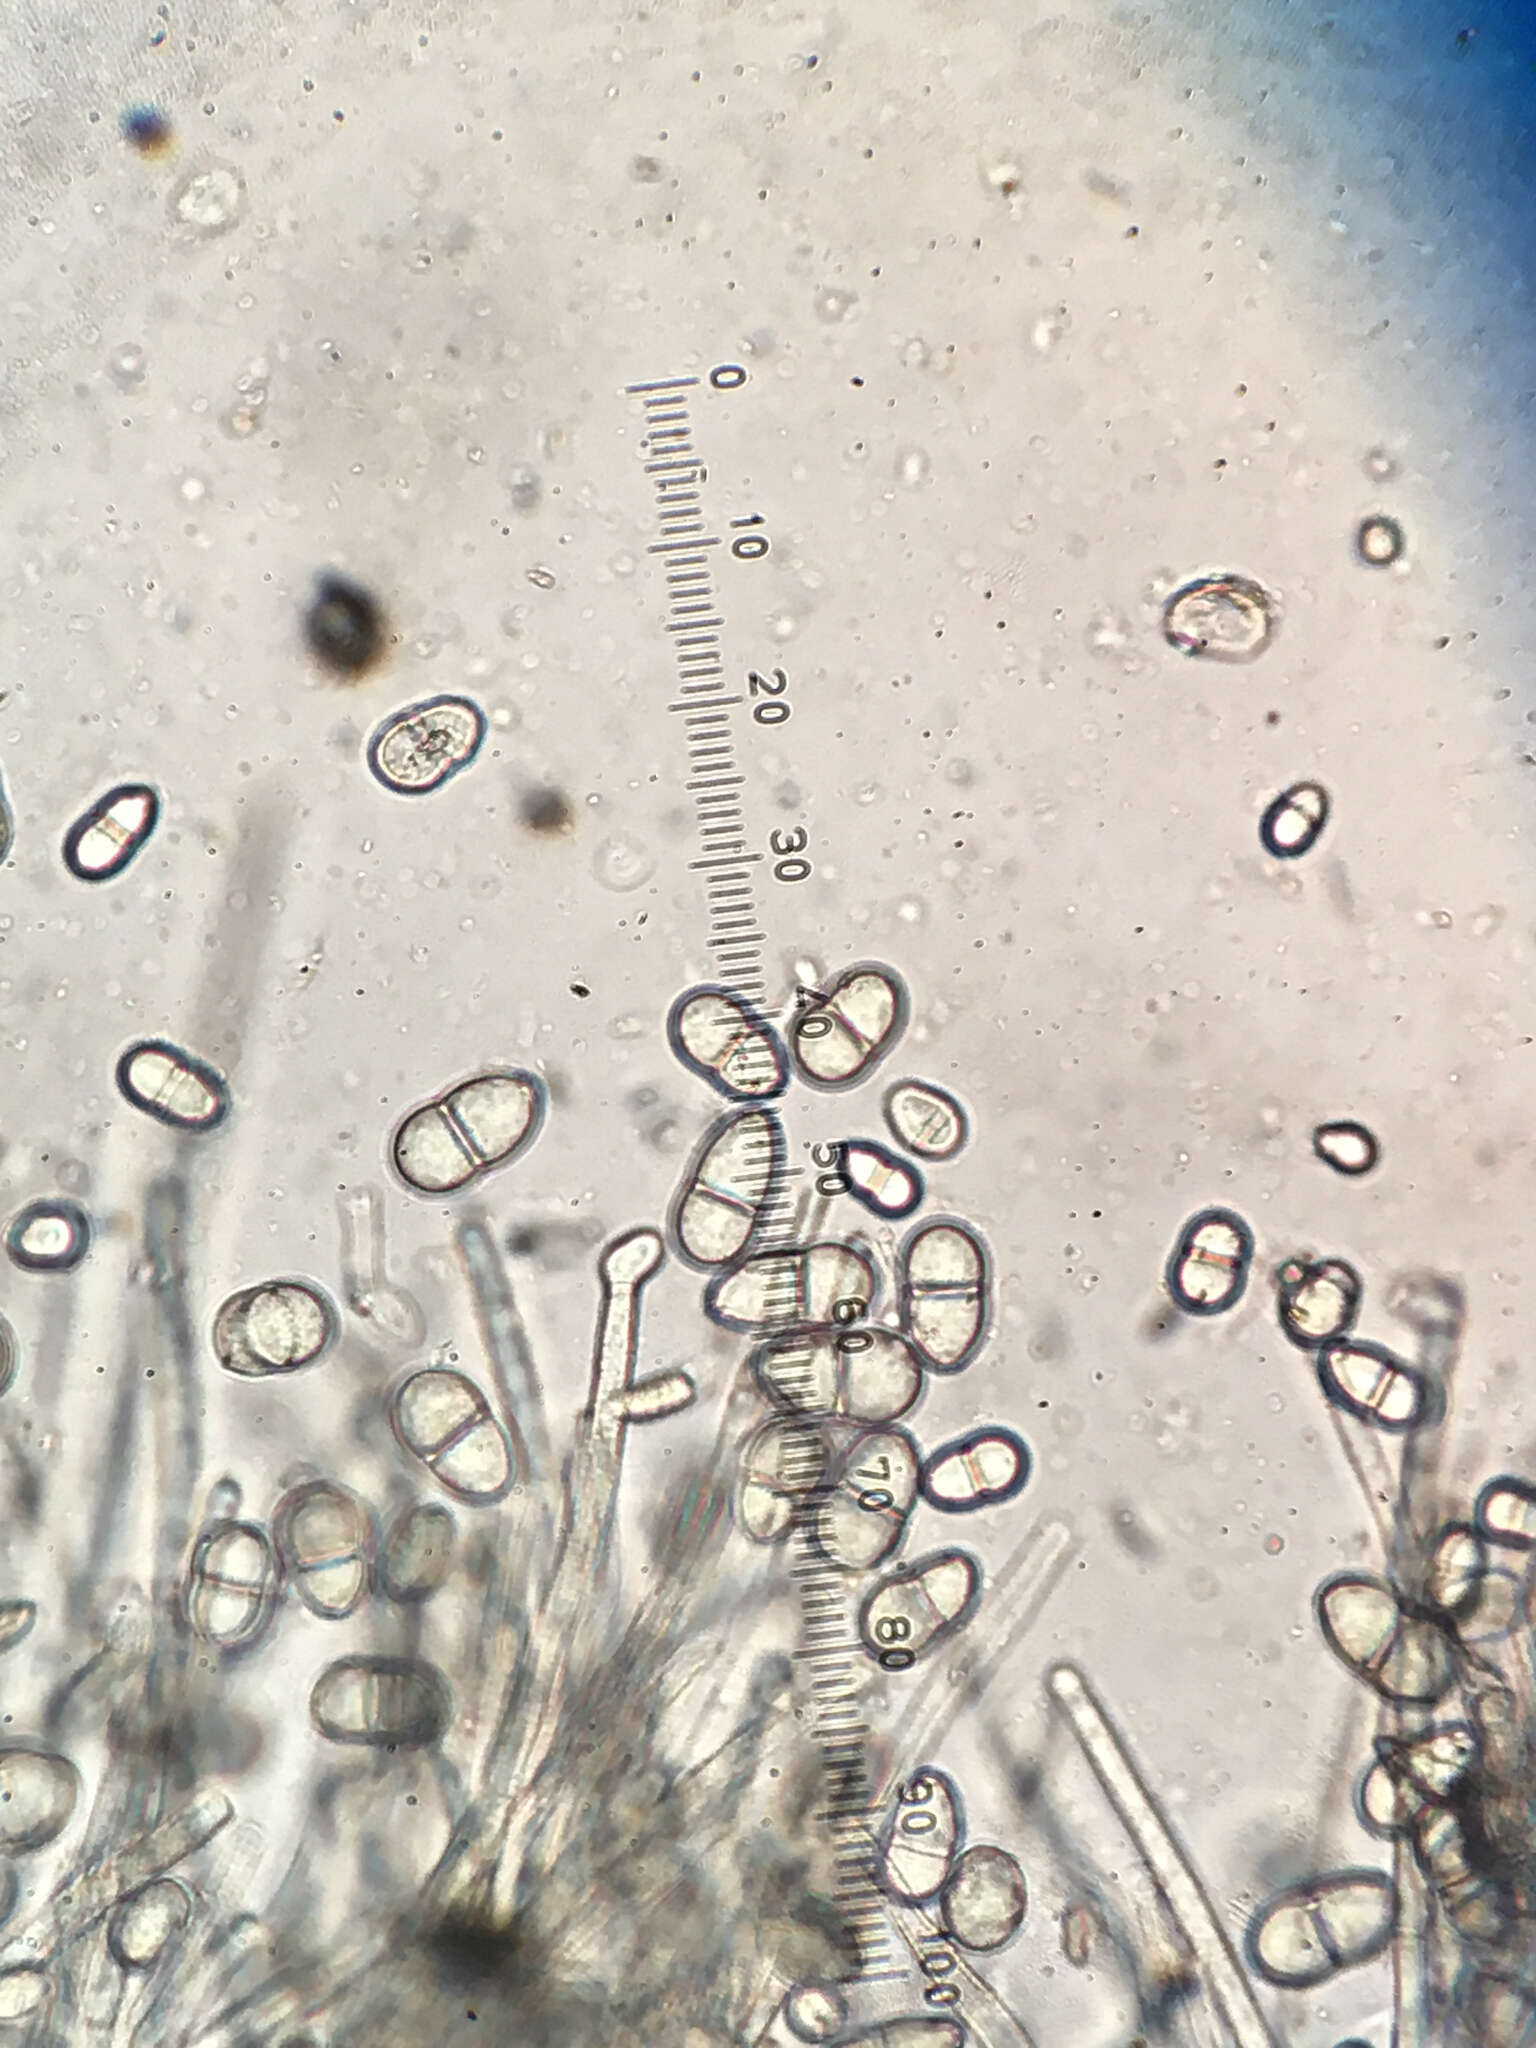 Sivun Trichothecium kuva